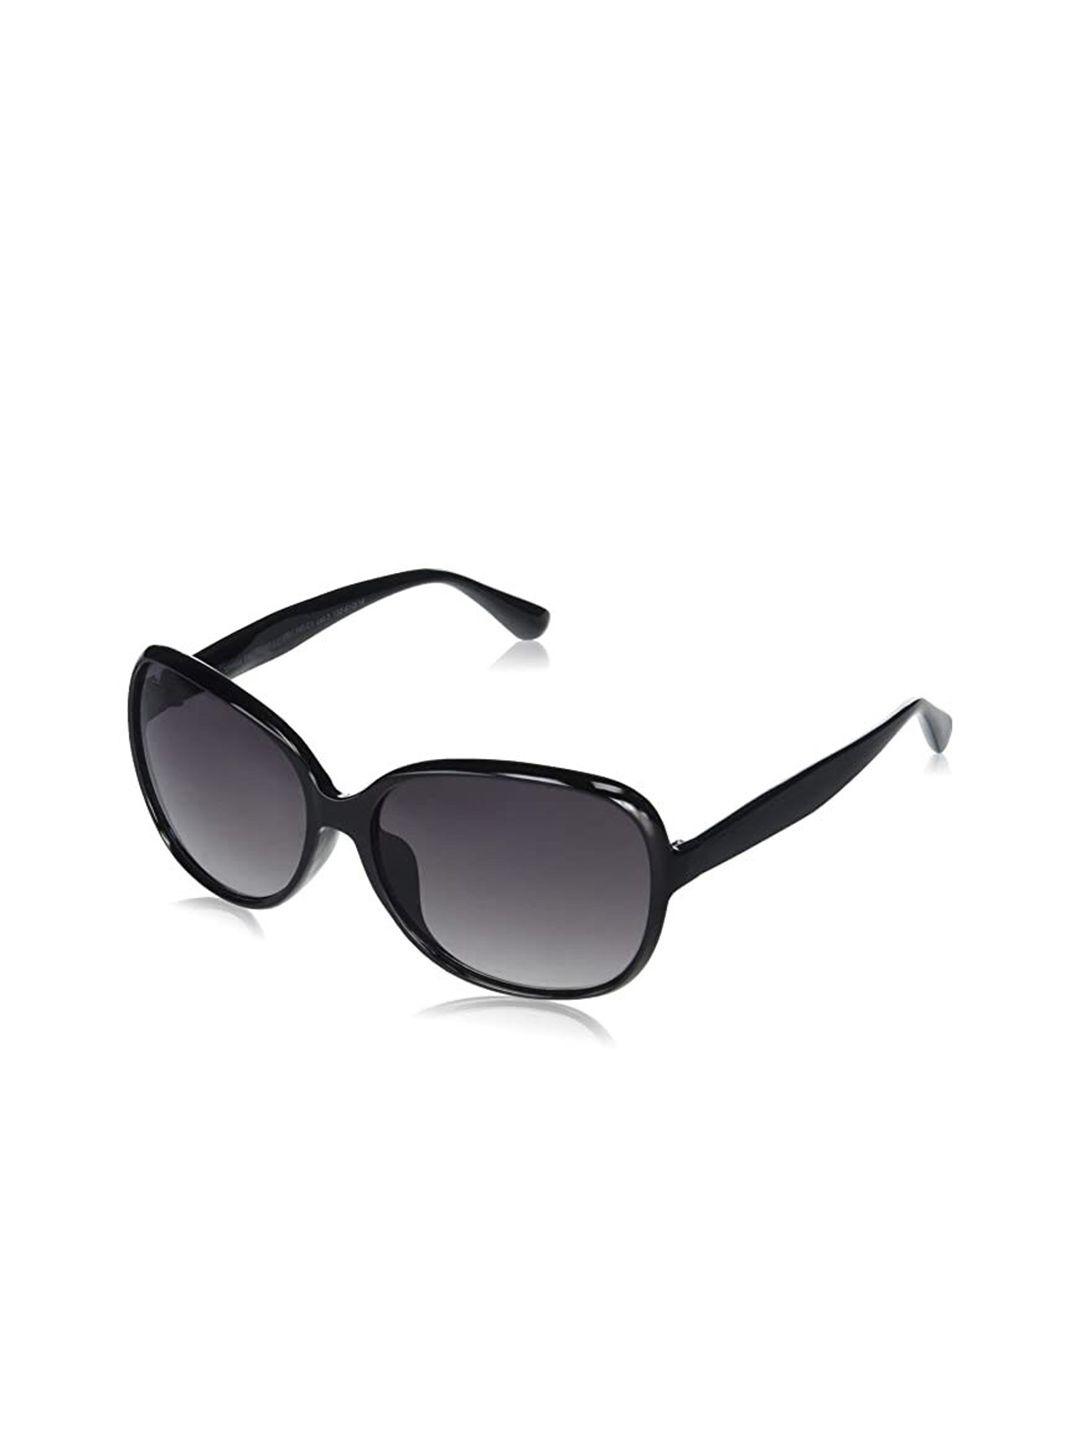 roadies unisex grey lens & black round sunglasses with uv protected lens